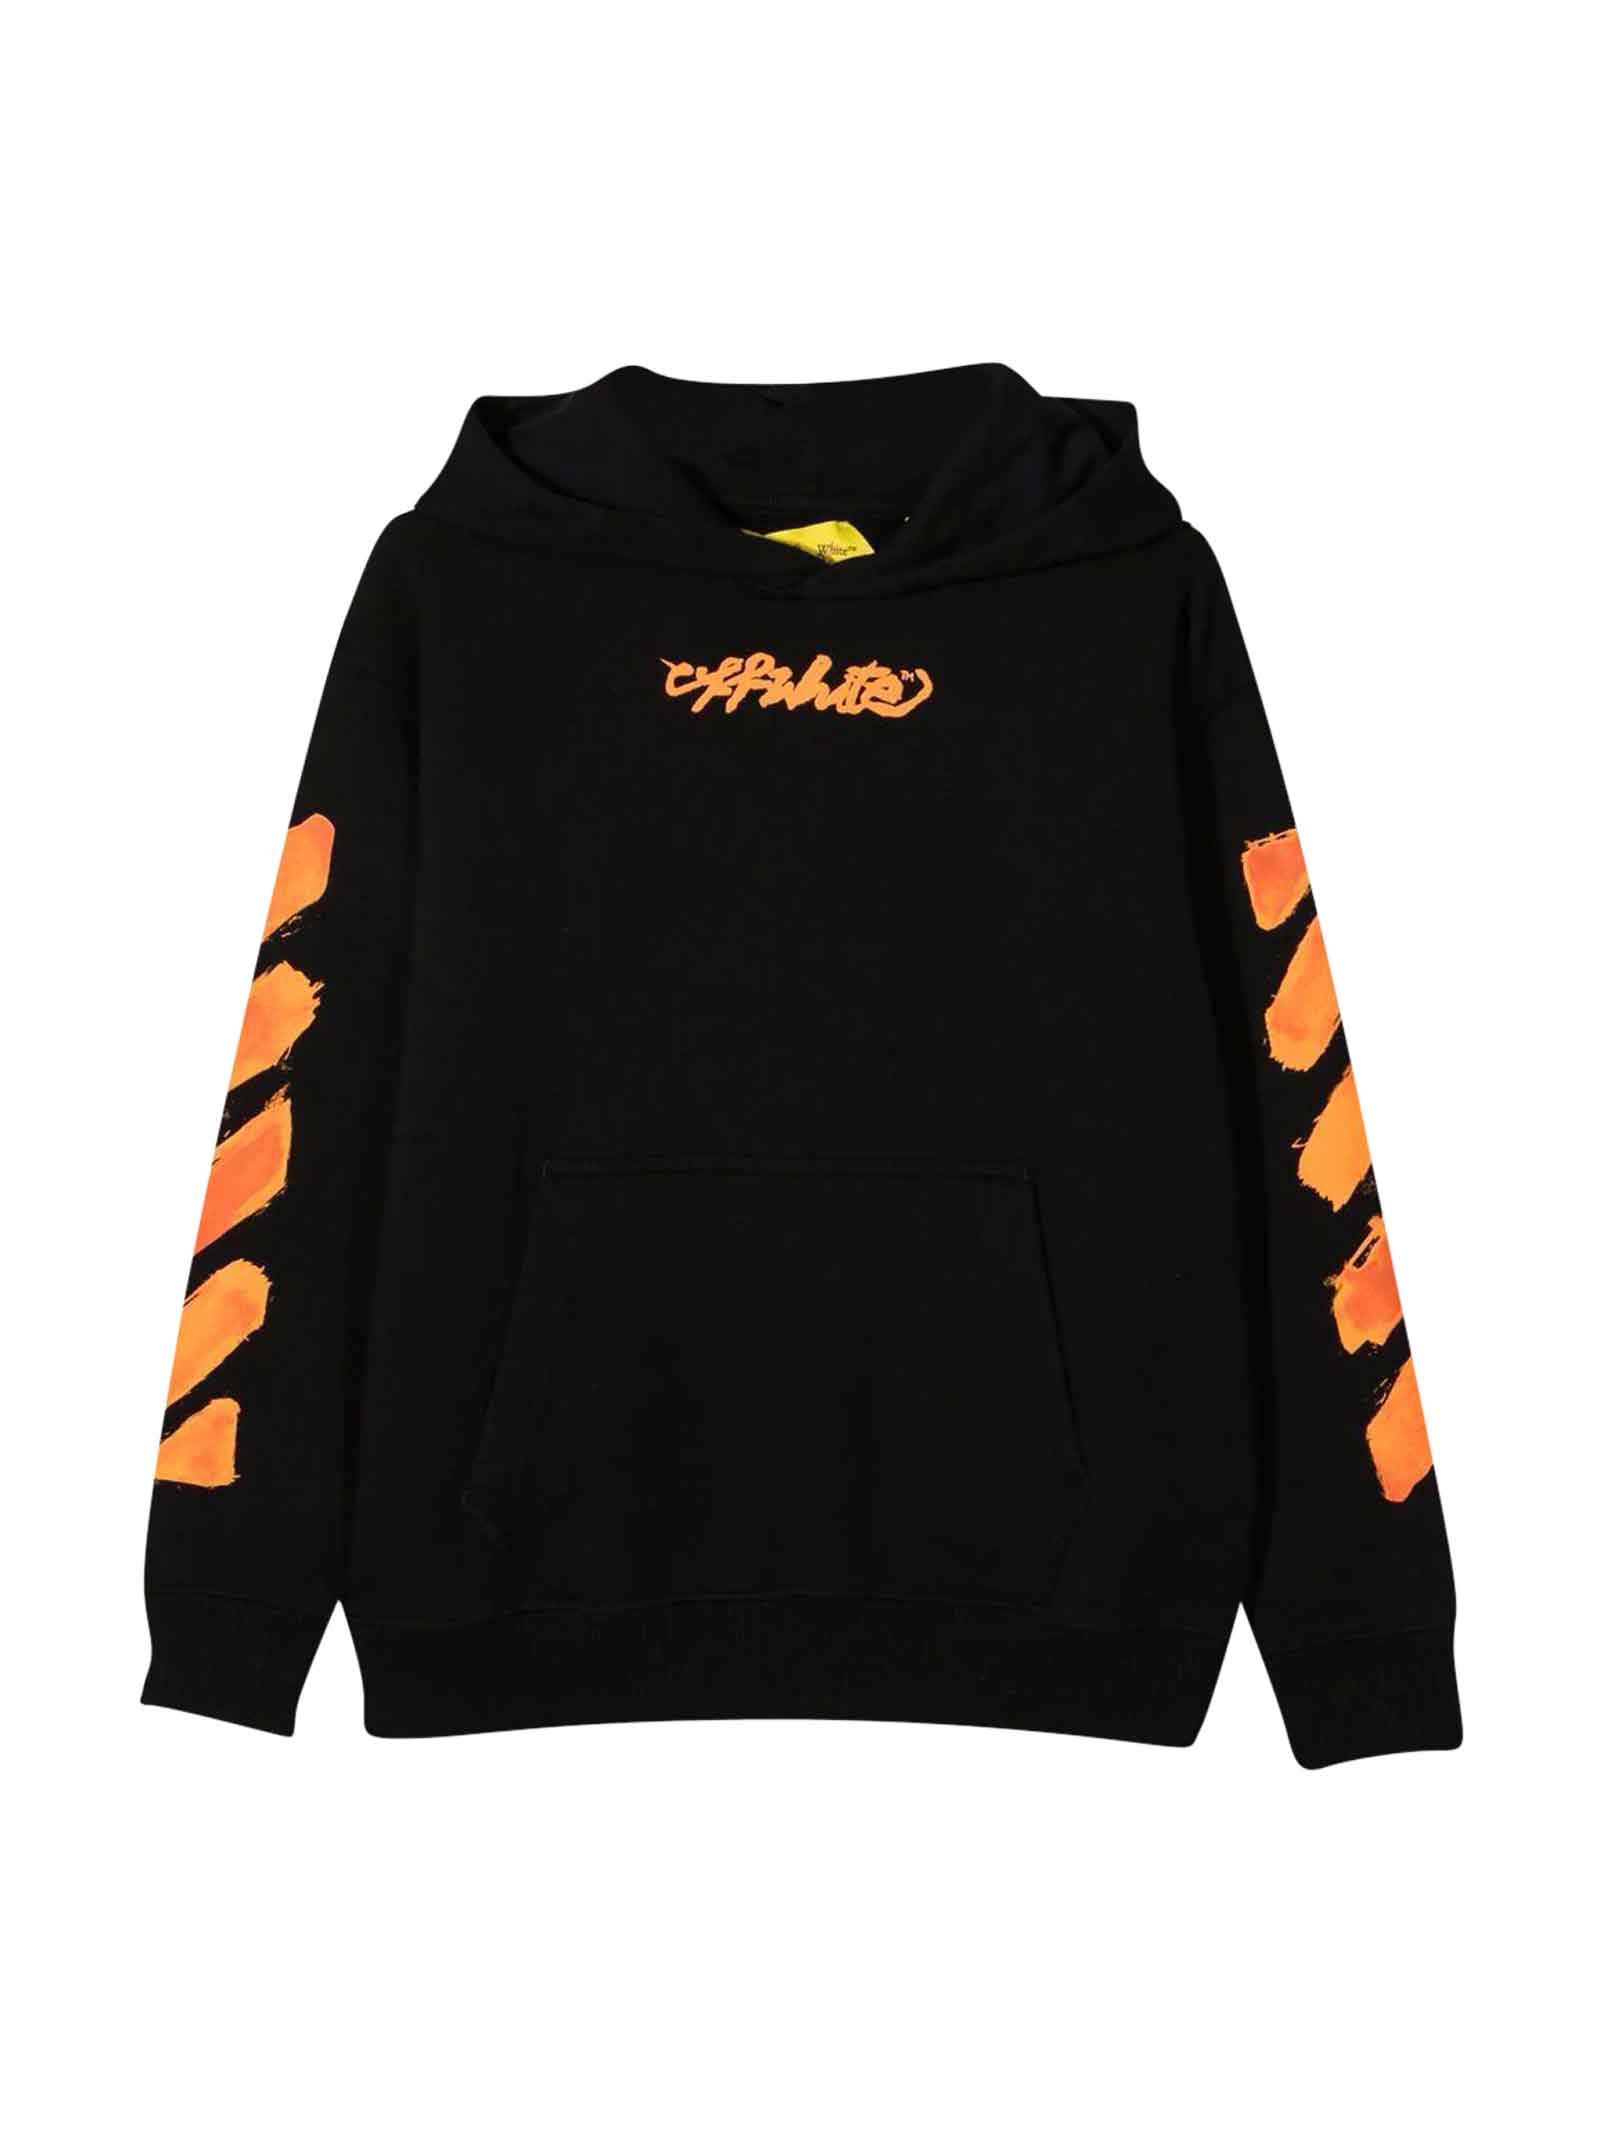 Off-White Black Sweatshirt With Hood And Orange Print